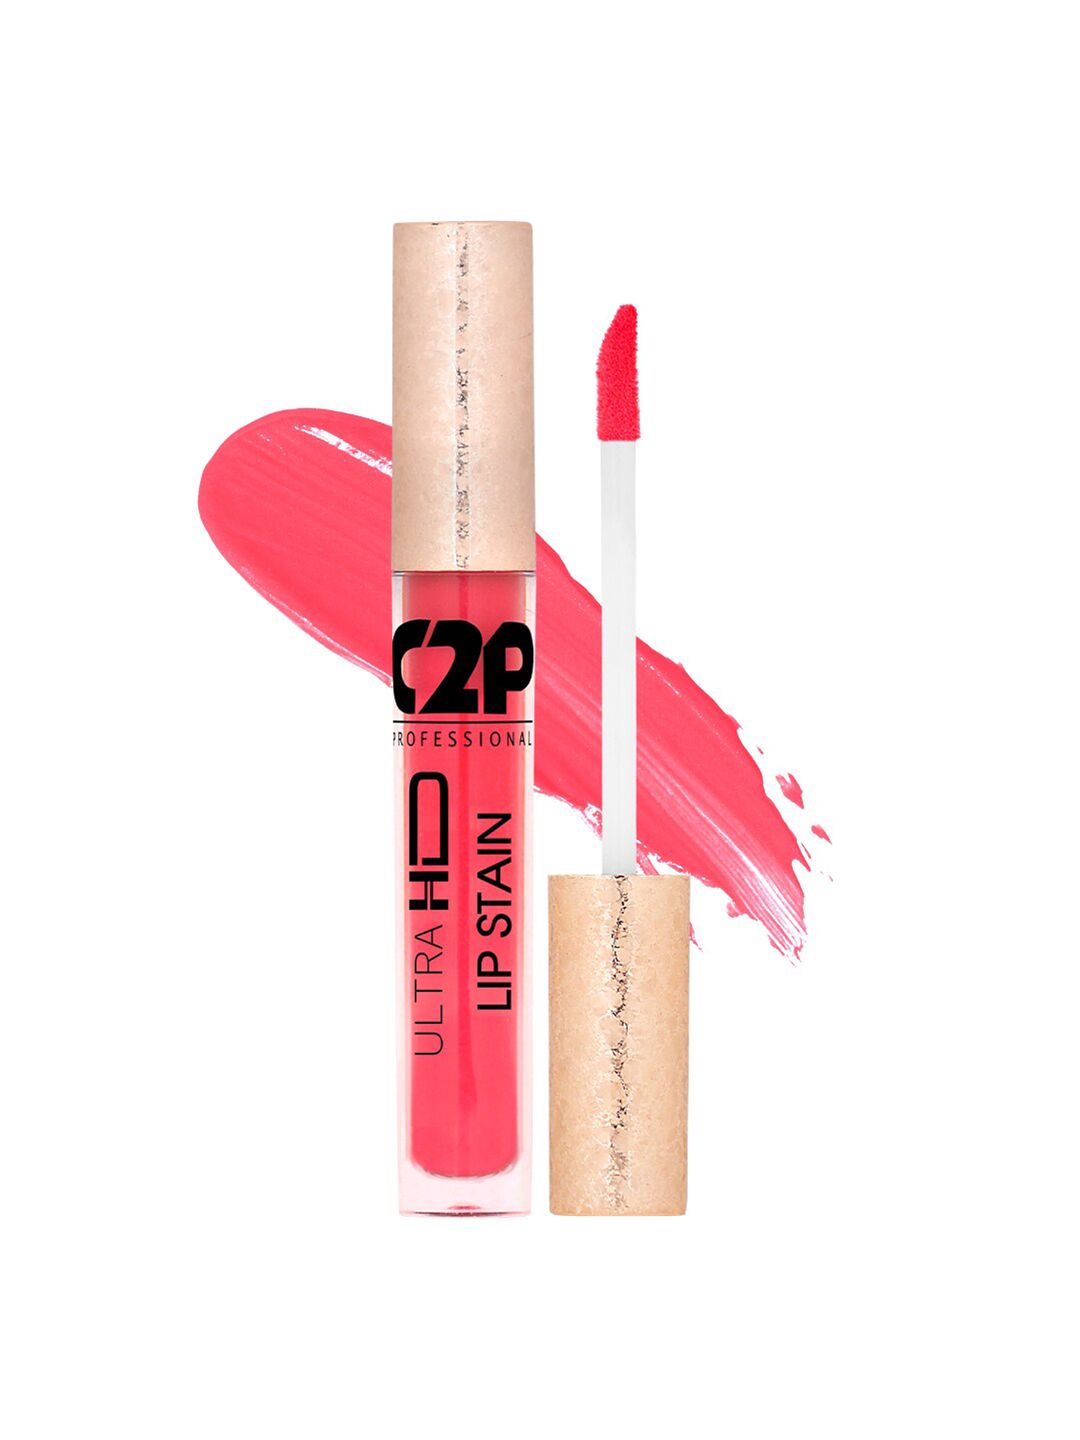 C2P PROFESSIONAL MAKEUP Lip Stain Liquid Lipstick - Jazz N' Rock 15 5ml Price in India